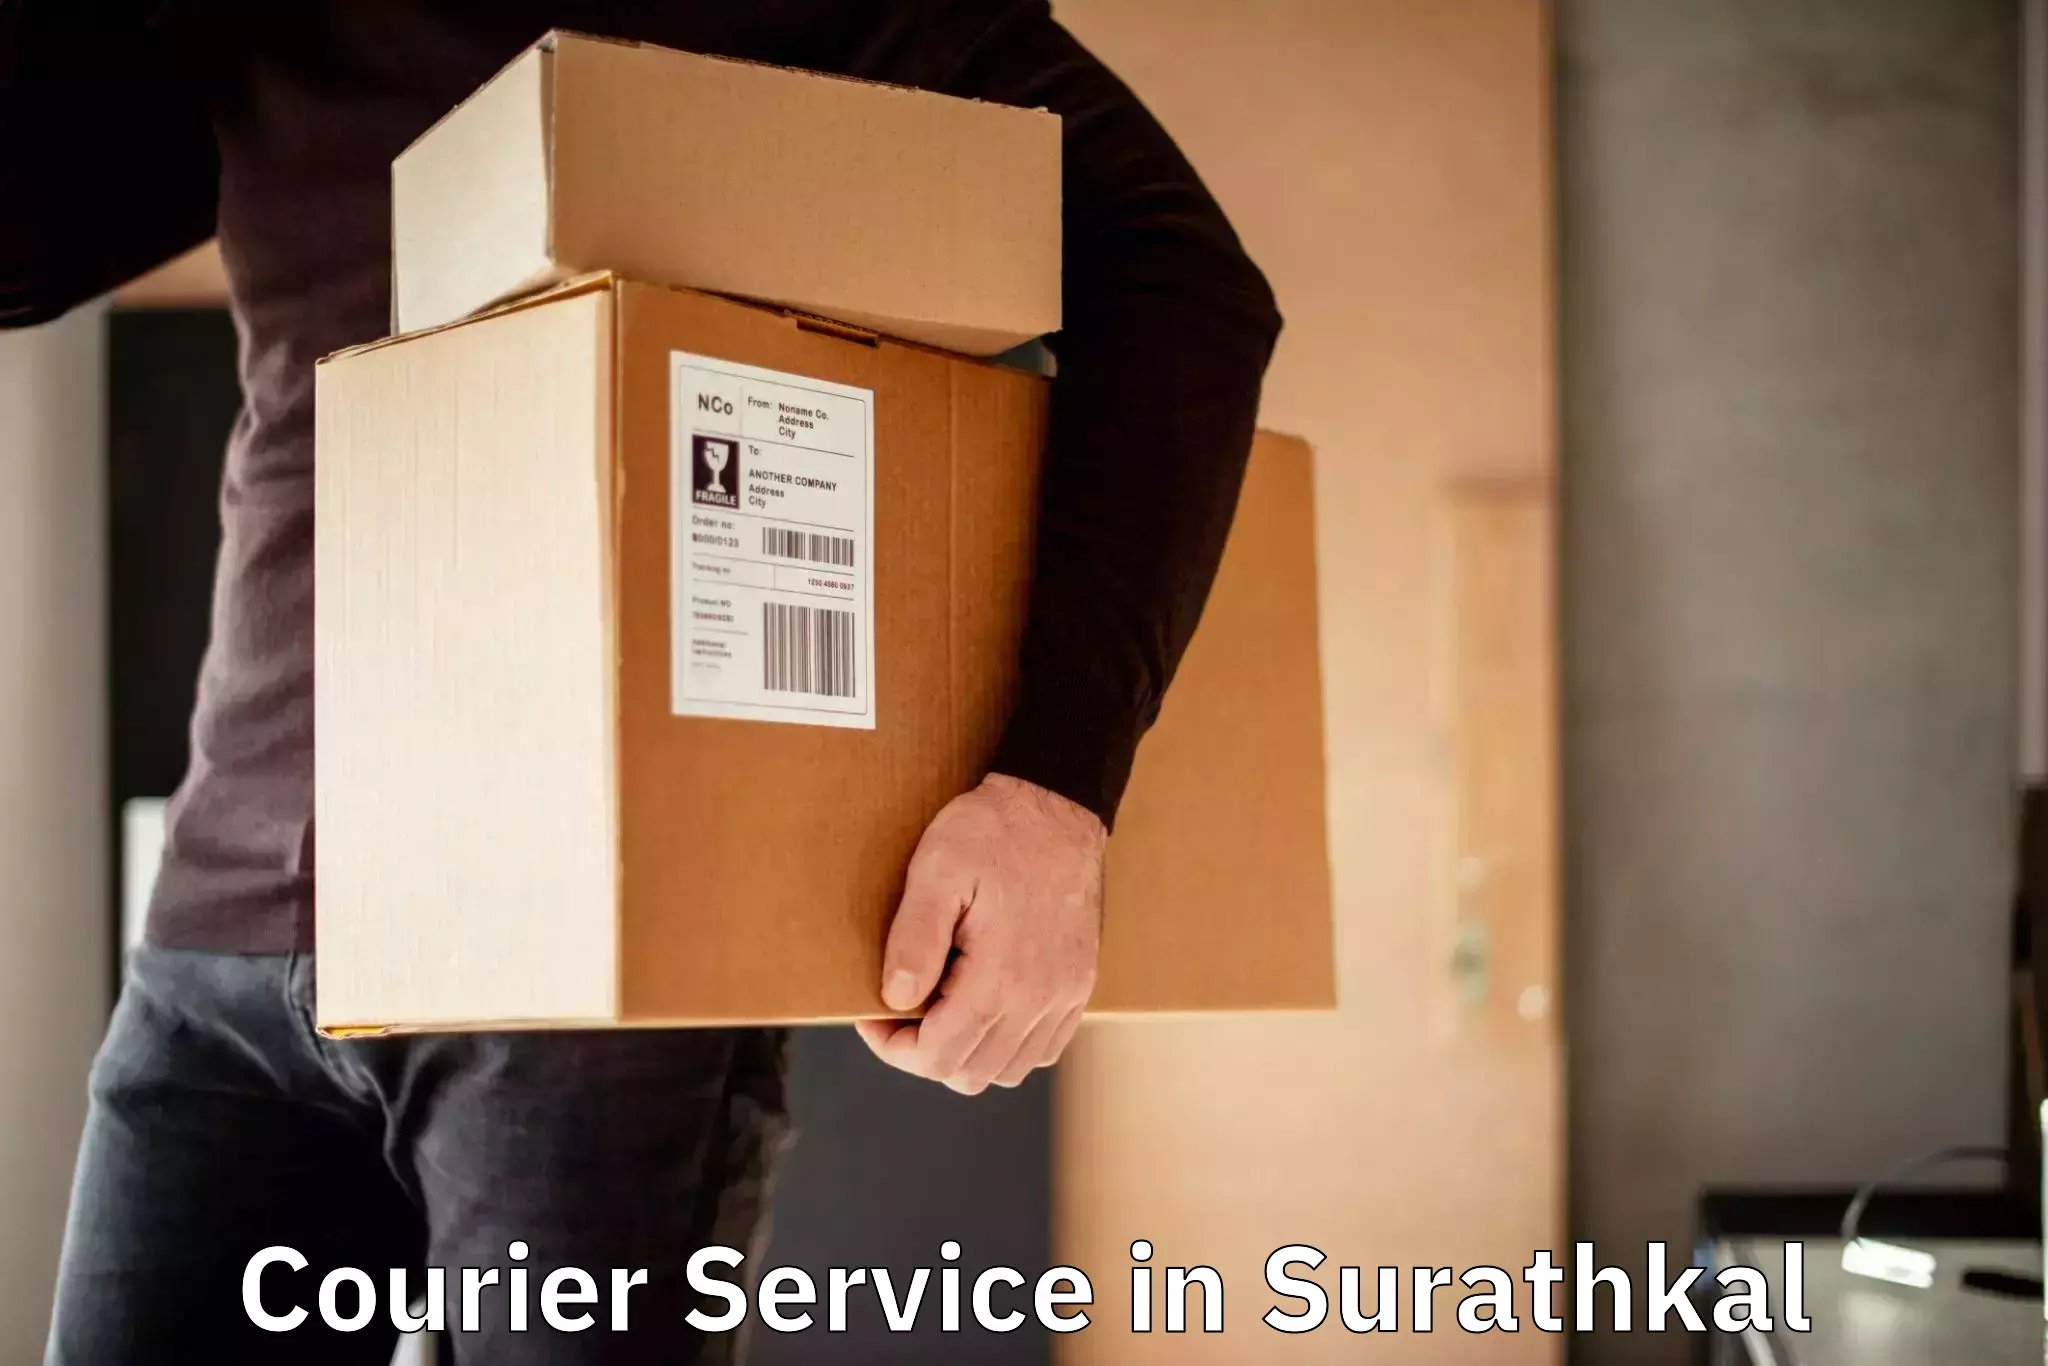 Bulk shipping discounts in Surathkal